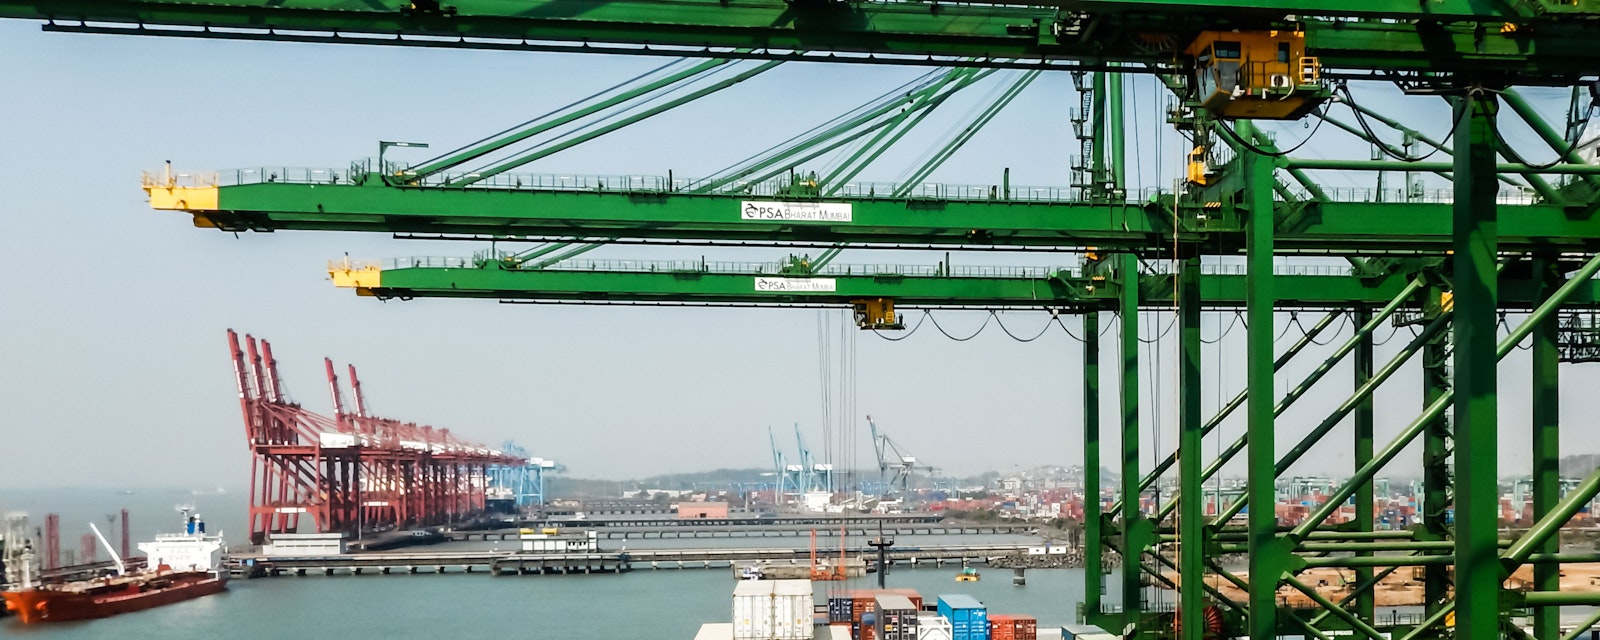 Container vessel alongside in the new Mbharat Mumbai Port